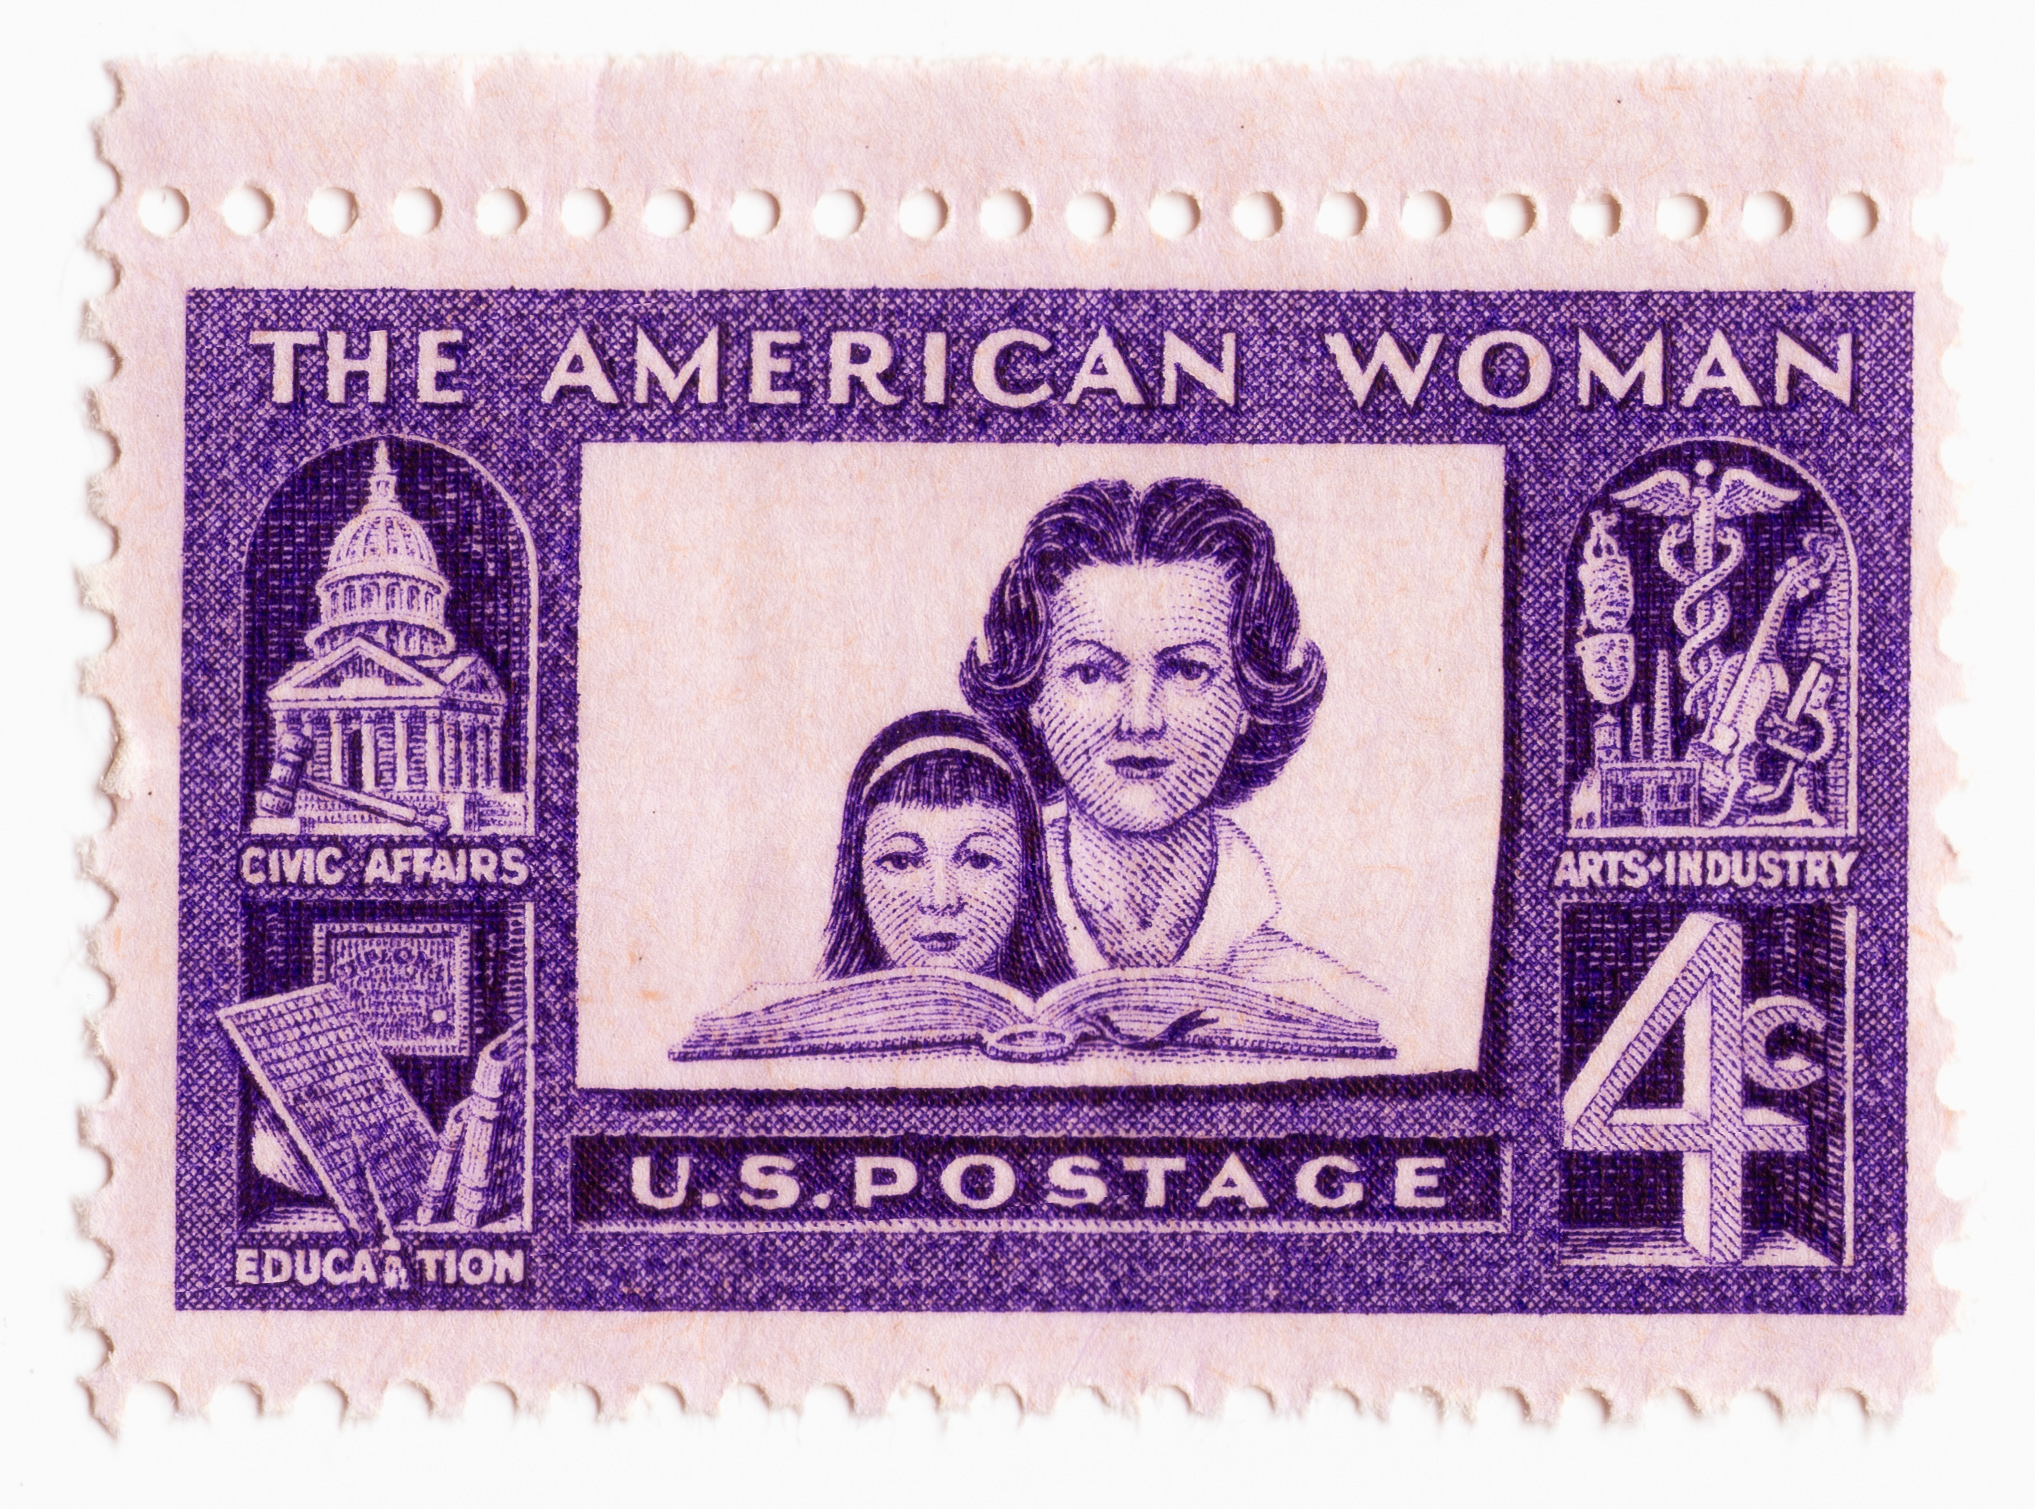 The American Woman (1960)